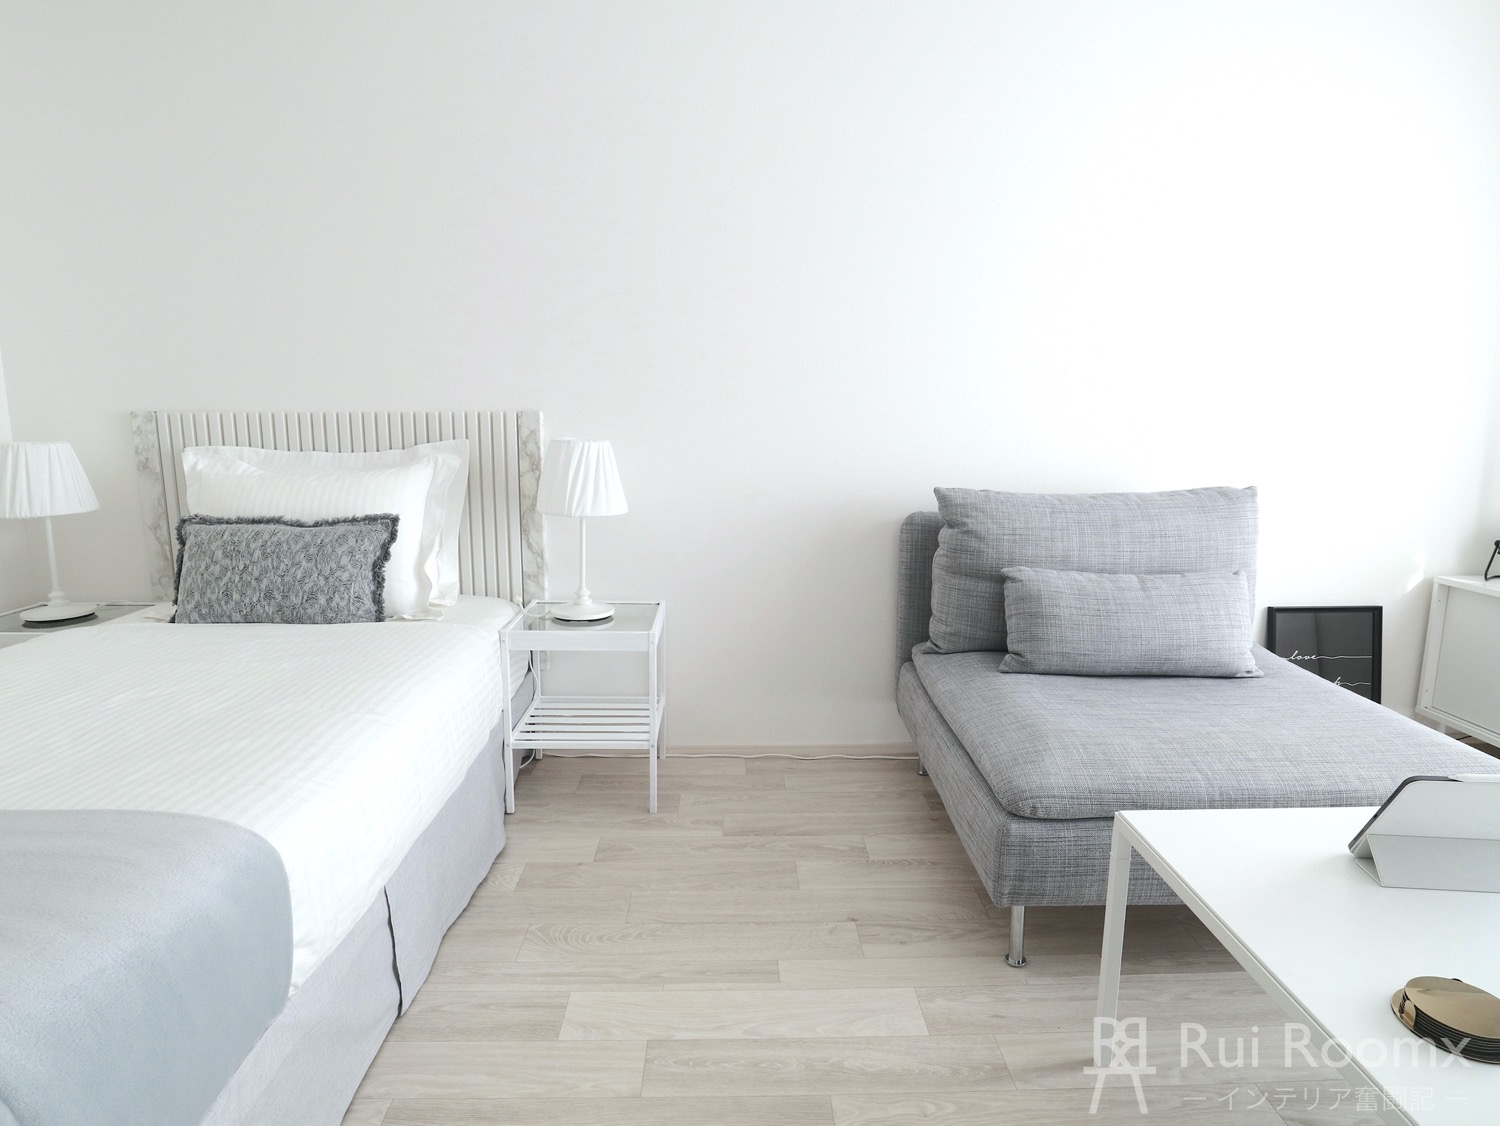 ruiroomx room hotellike-interior bed gray-sofa